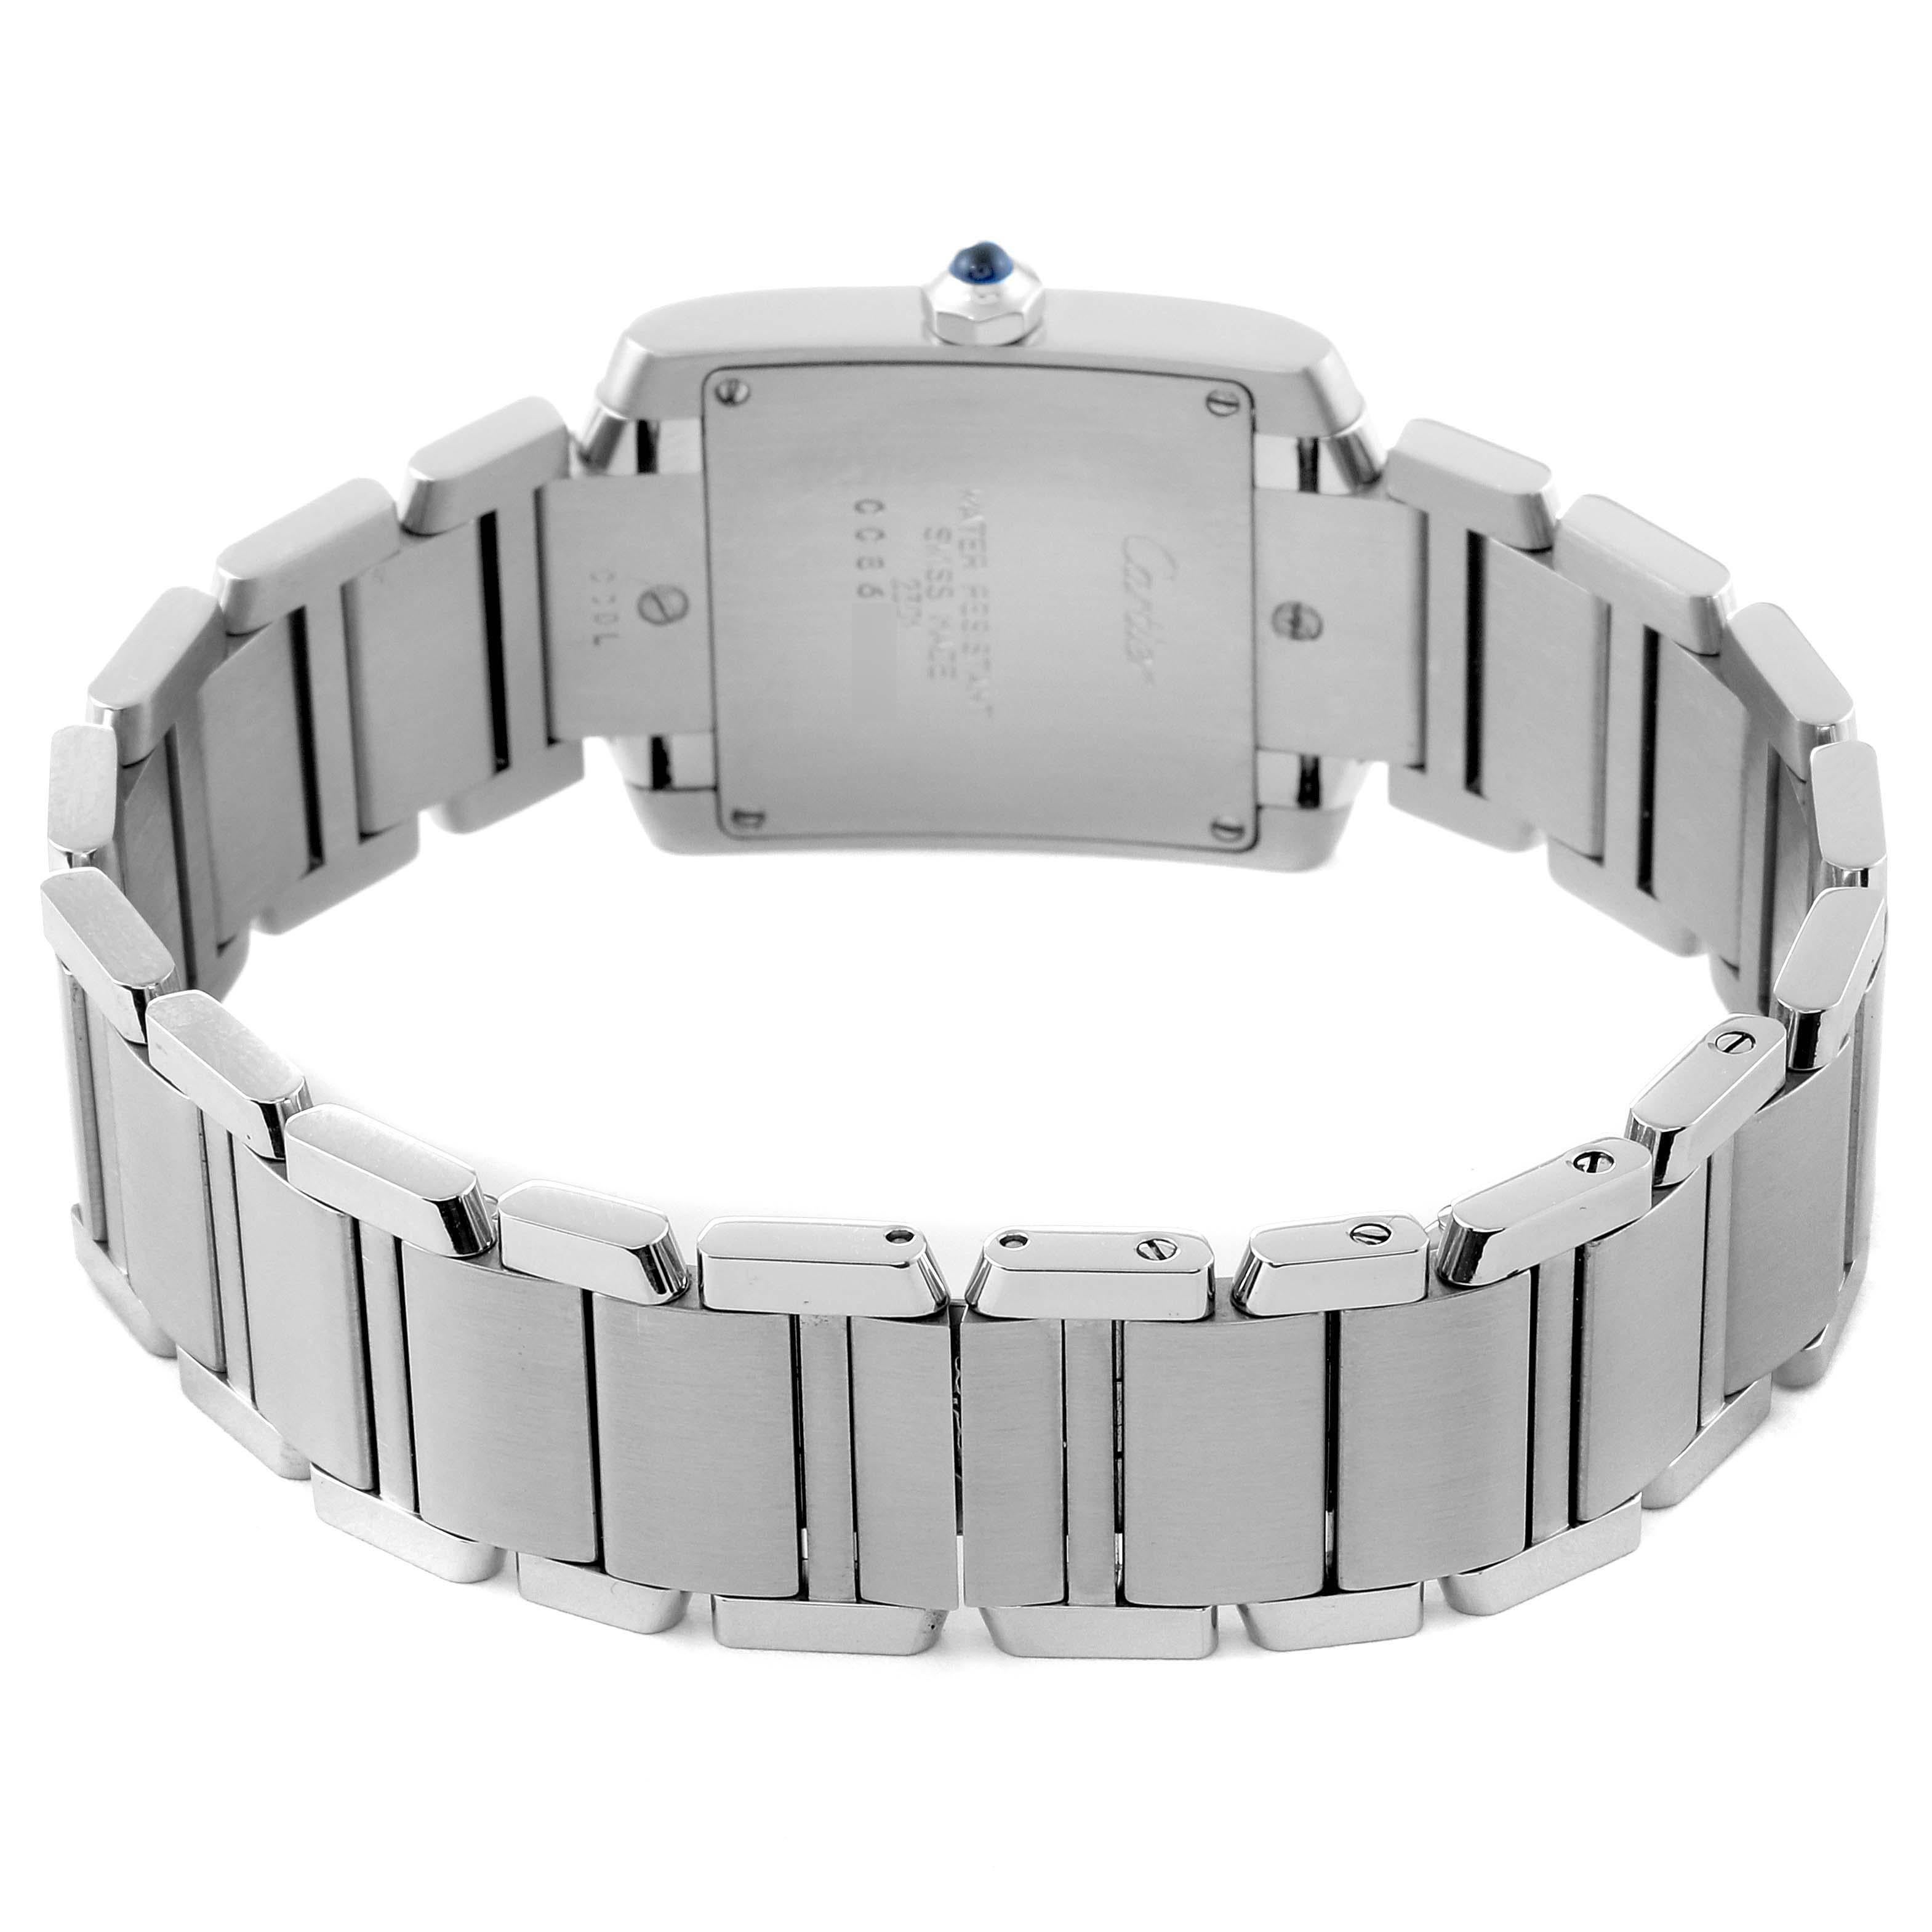 Cartier Tank Francaise Midsize Steel Ladies Watch WSTA0005 2